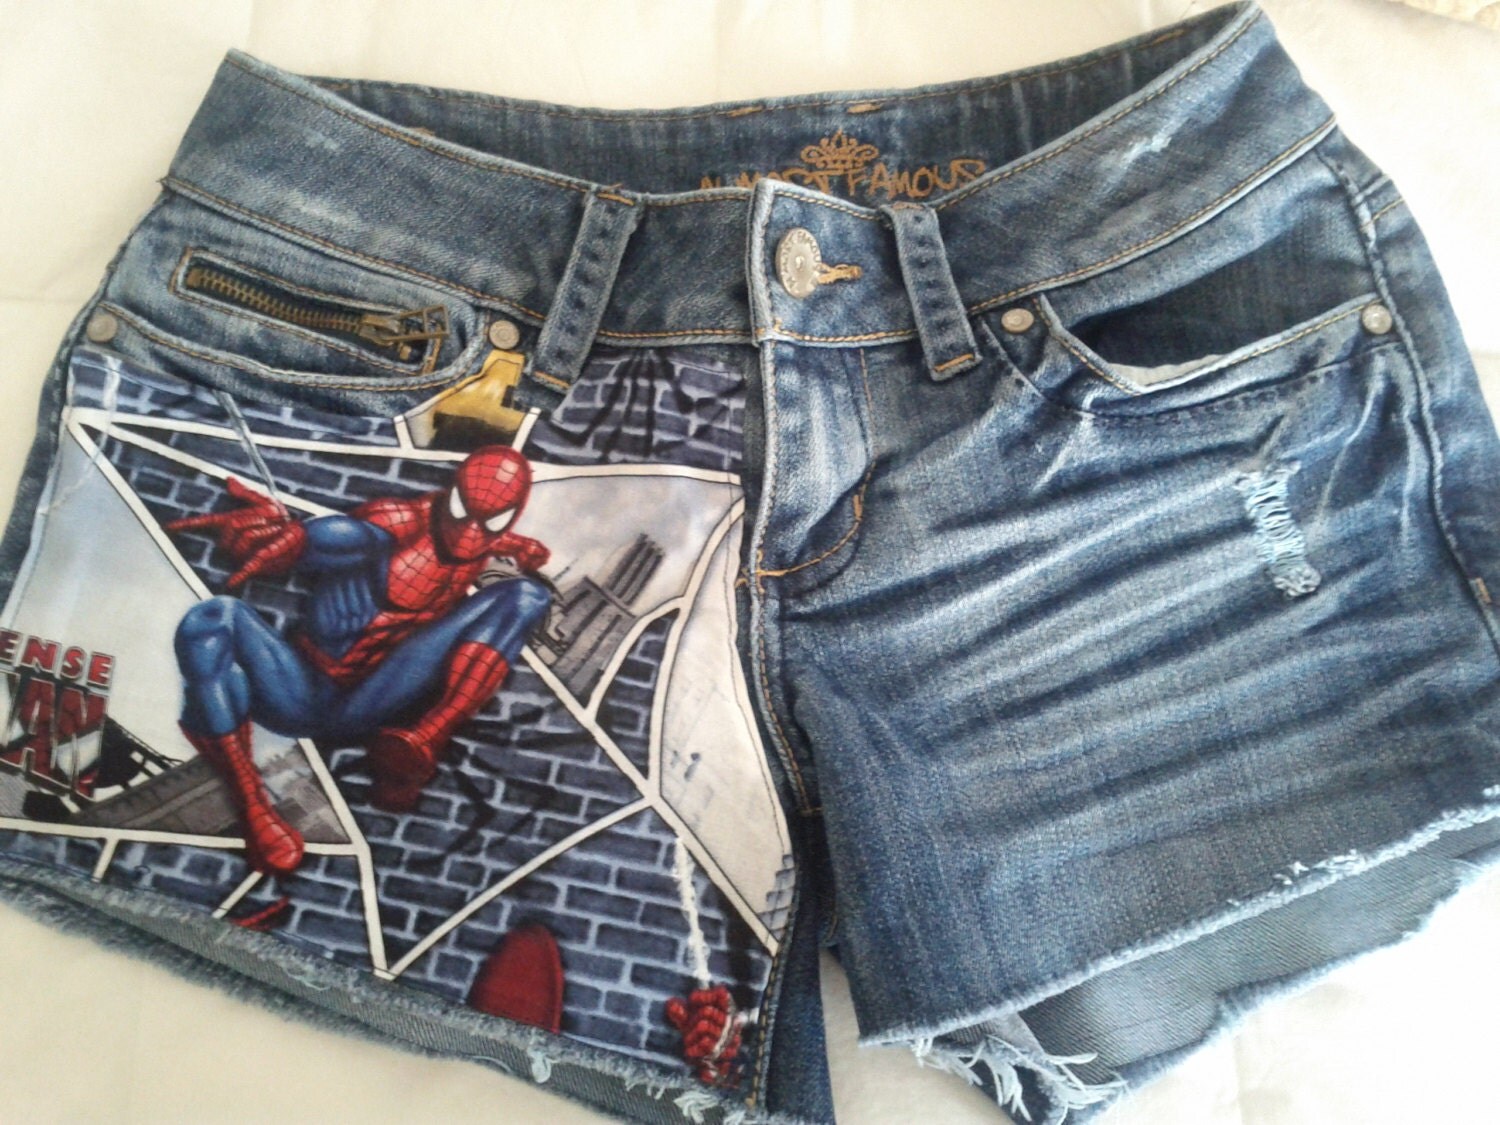 Custom. Denim shorts with Marvel Spider-Man fabric on one